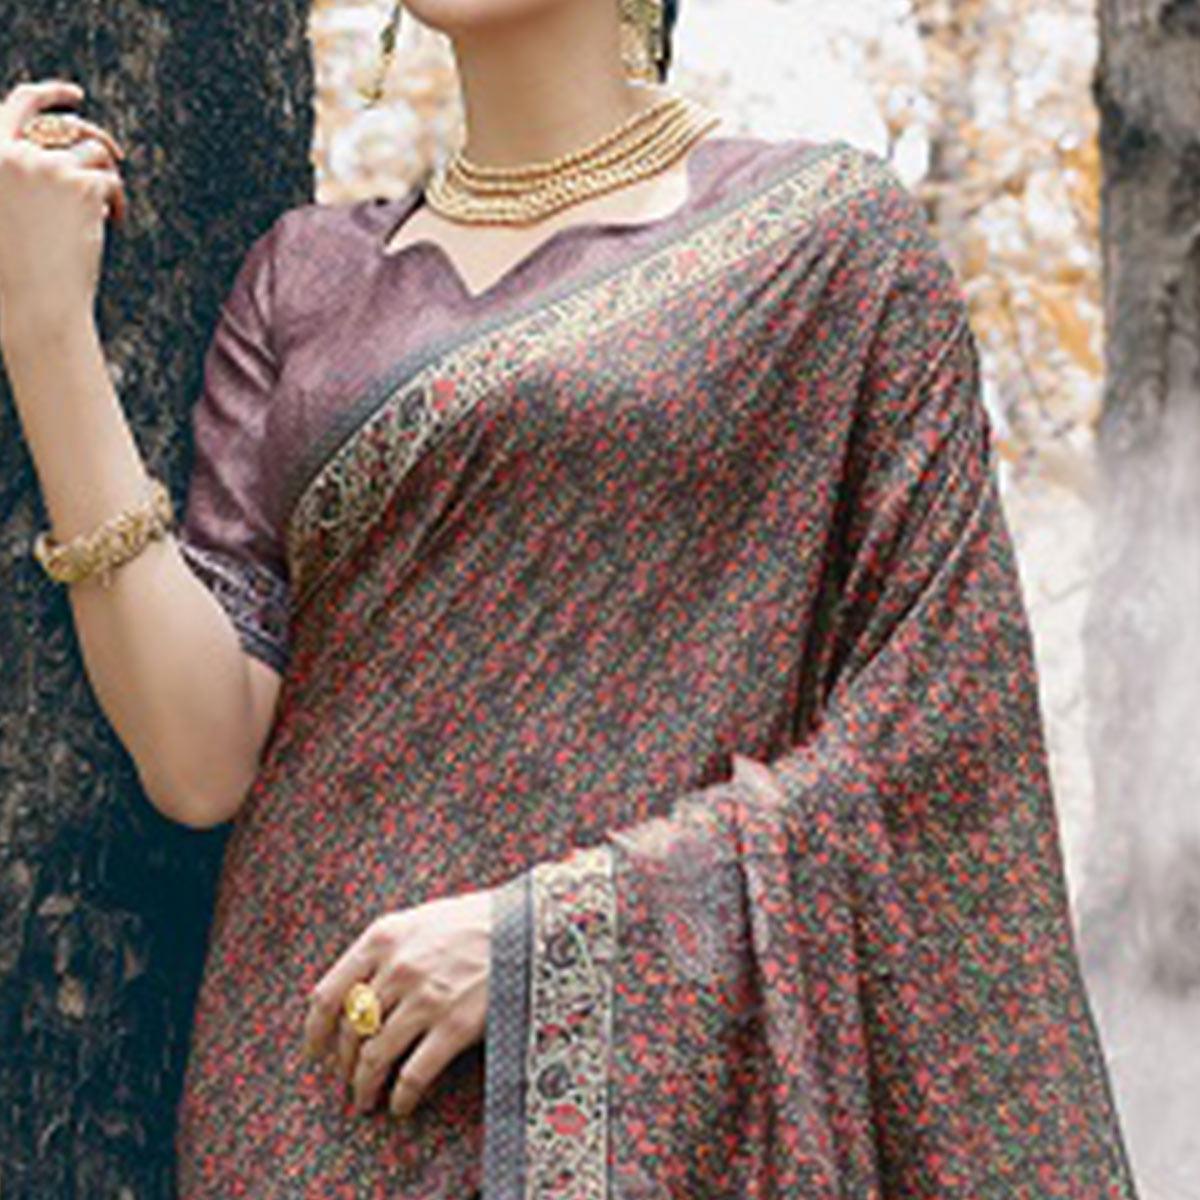 Majesty Mauve Colored Festive Wear Printed Art Silk Saree - Peachmode